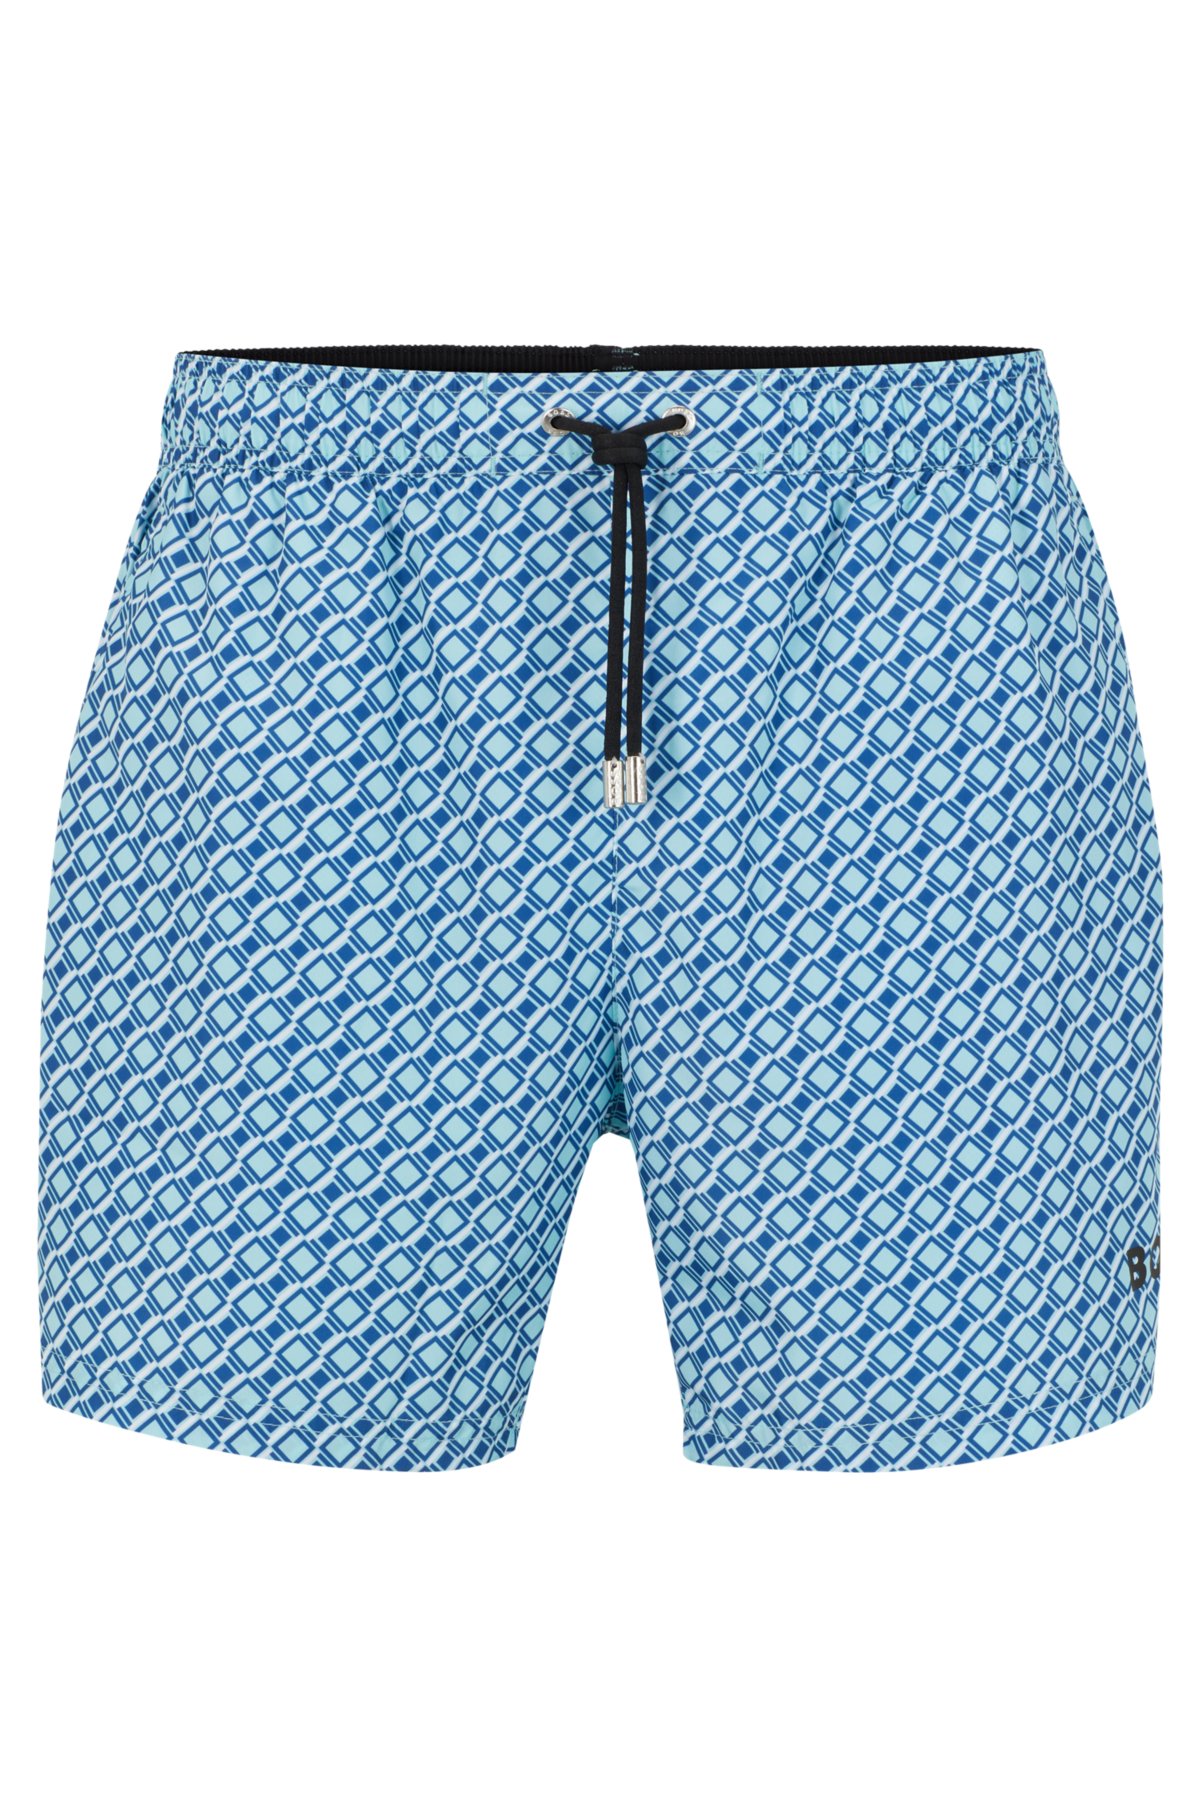 BOSS - Logo swim shorts with all-over seasonal pattern